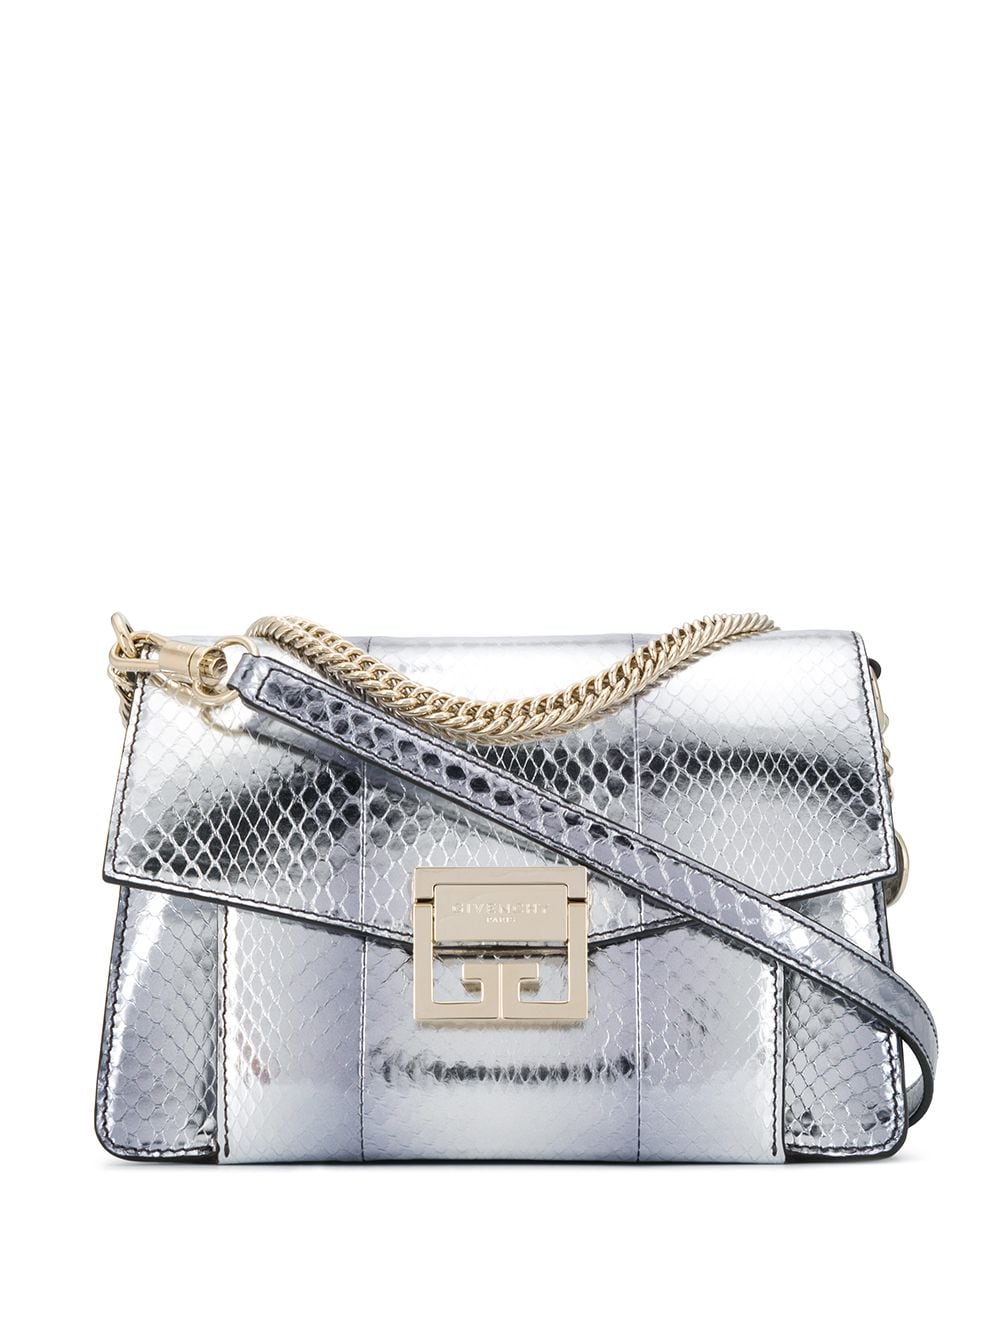 фото Givenchy сумка-тоут gv3 с эффектом металлик